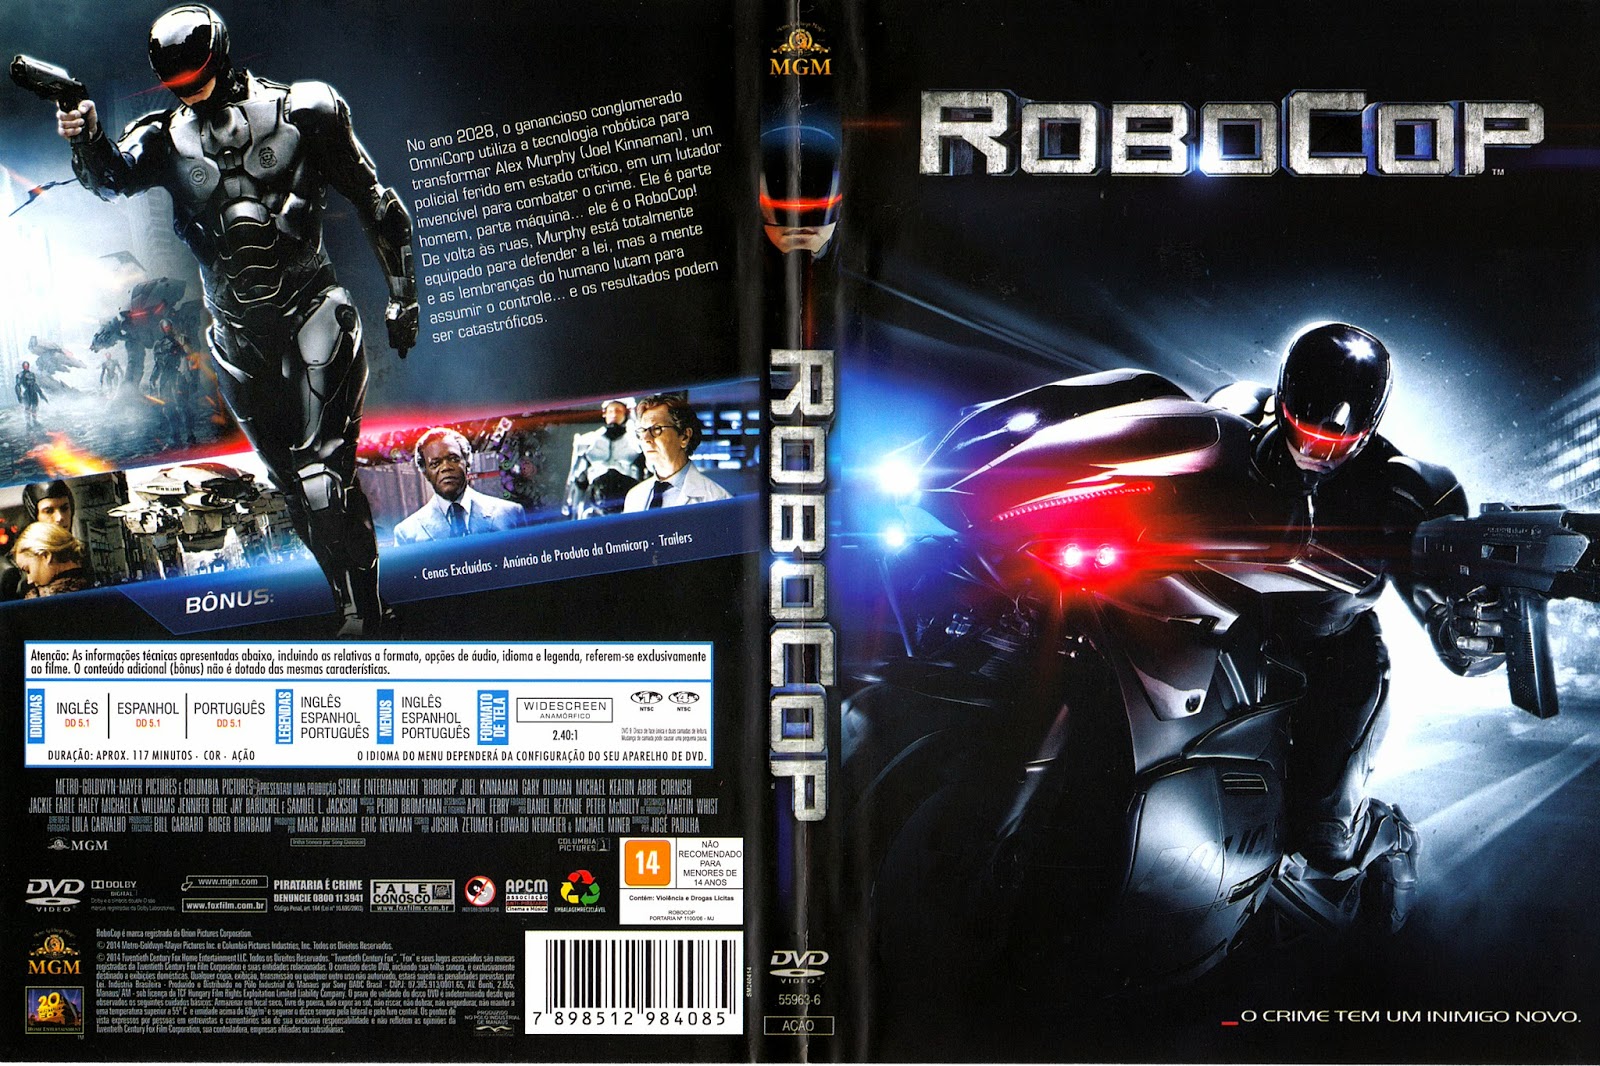 Робокоп пс 5. Robocop 2014 Blu ray Cover. Робокоп 1 2 3 на двд. Robocop 1987 DVD Cover. Robocop DVD Cover.